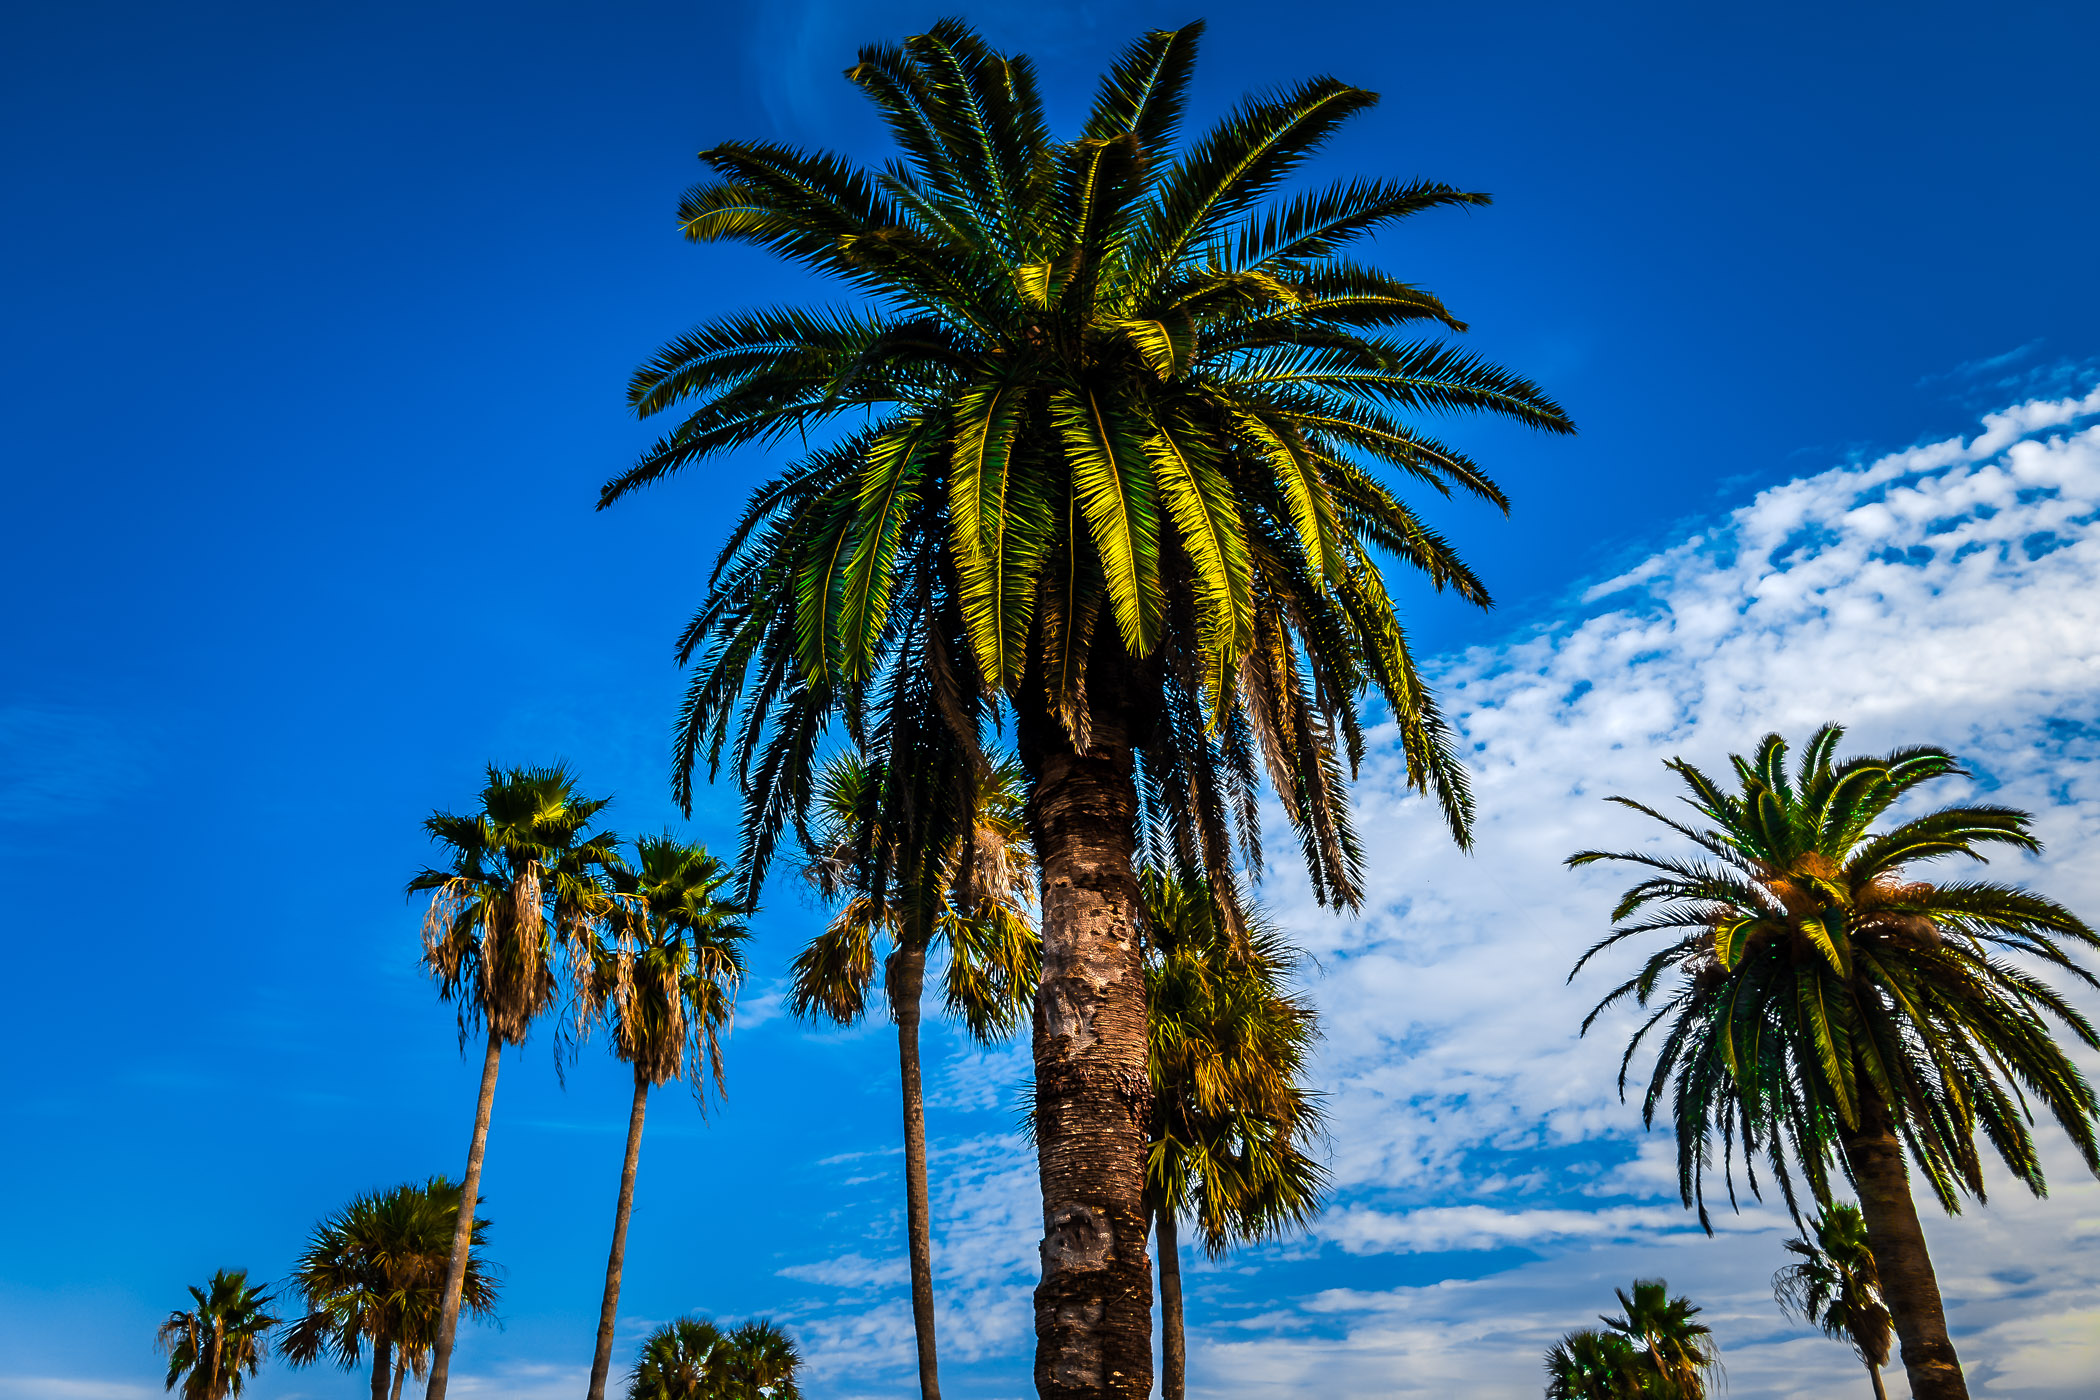 Palm trees grow high into the Galveston, Texas, sky.